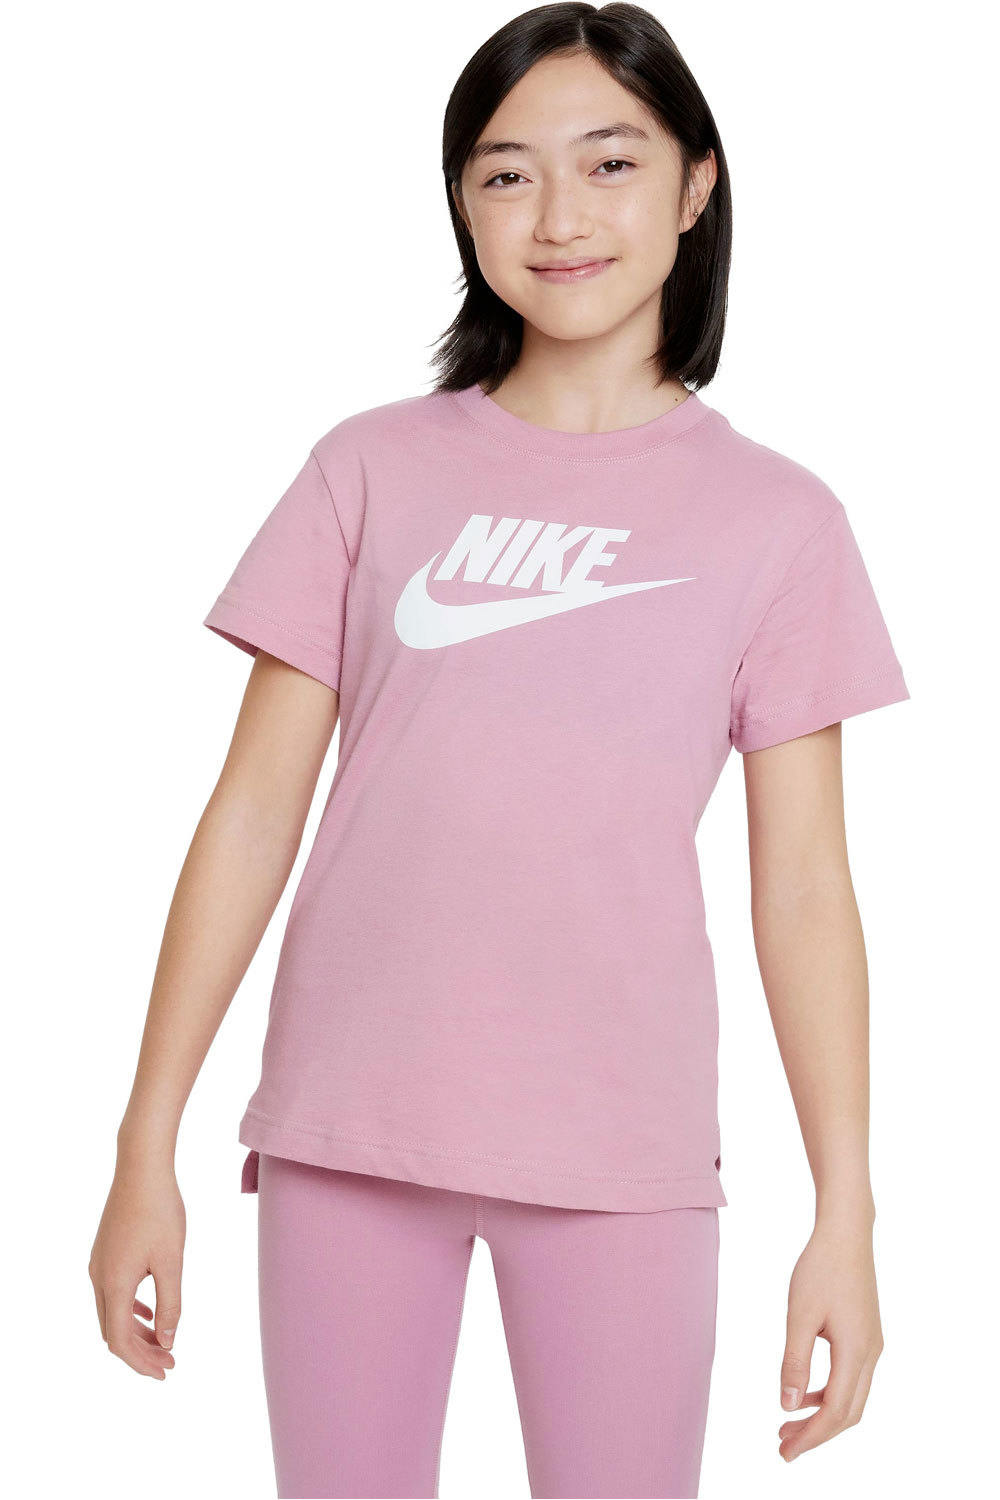 Nike camiseta manga corta niña G NSW TEE DPTL BASIC FUTURA vista frontal